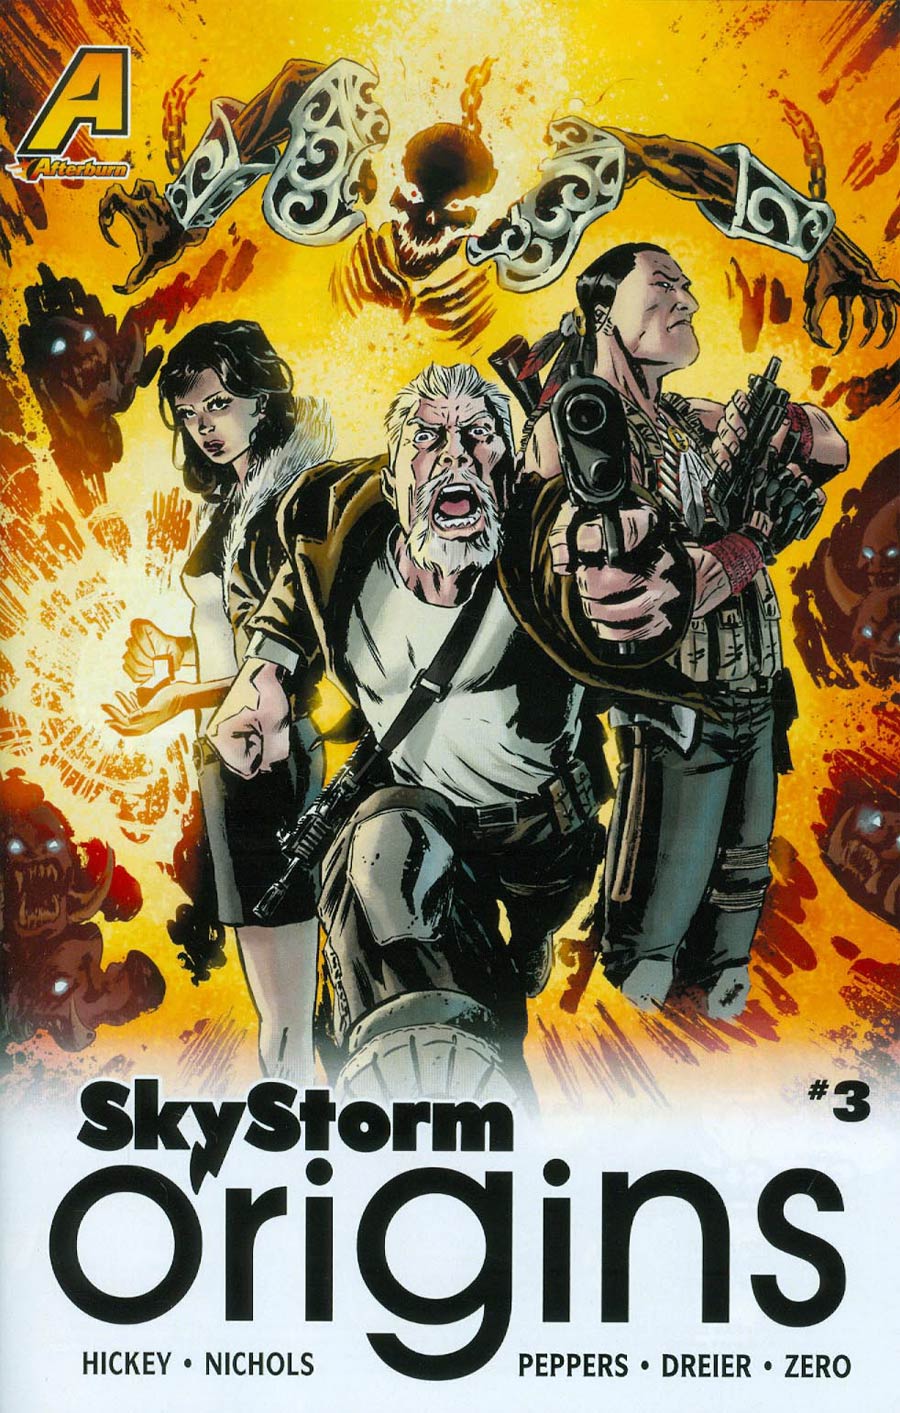 Skystorm Origins #3